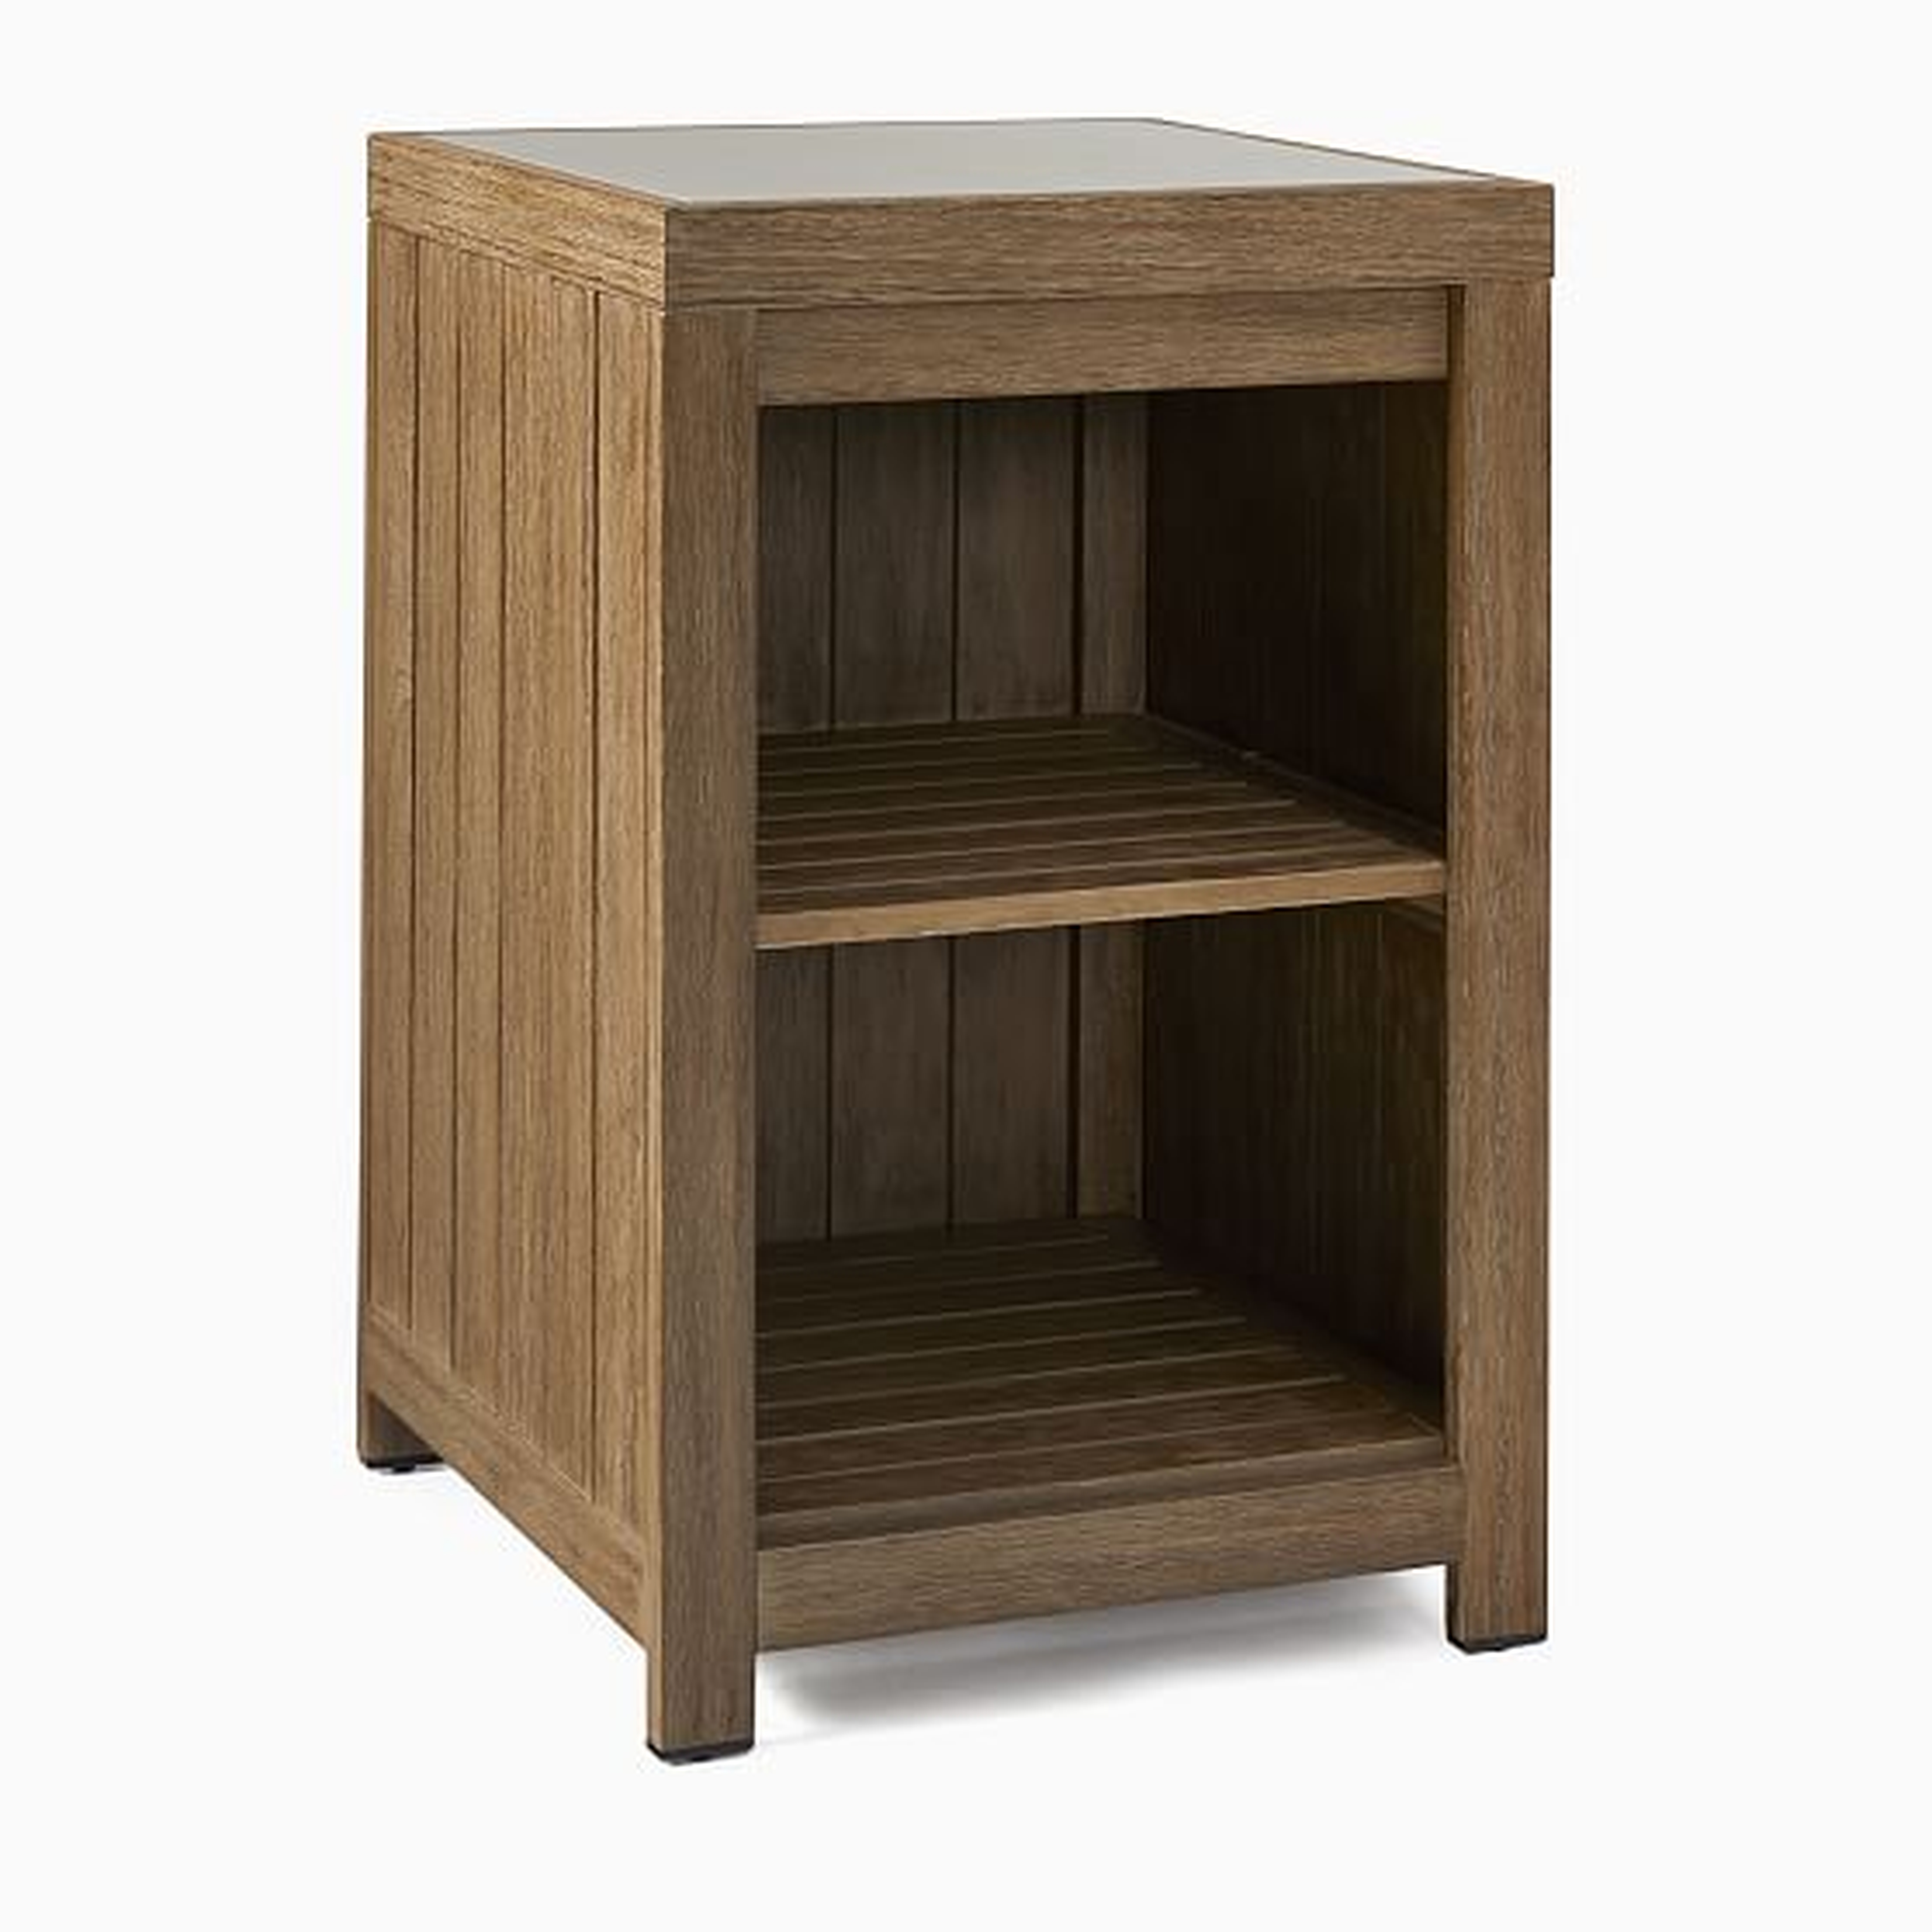 OPEN BOX: Portside Kitchen Open Shelves Cabinet, Driftwood - West Elm